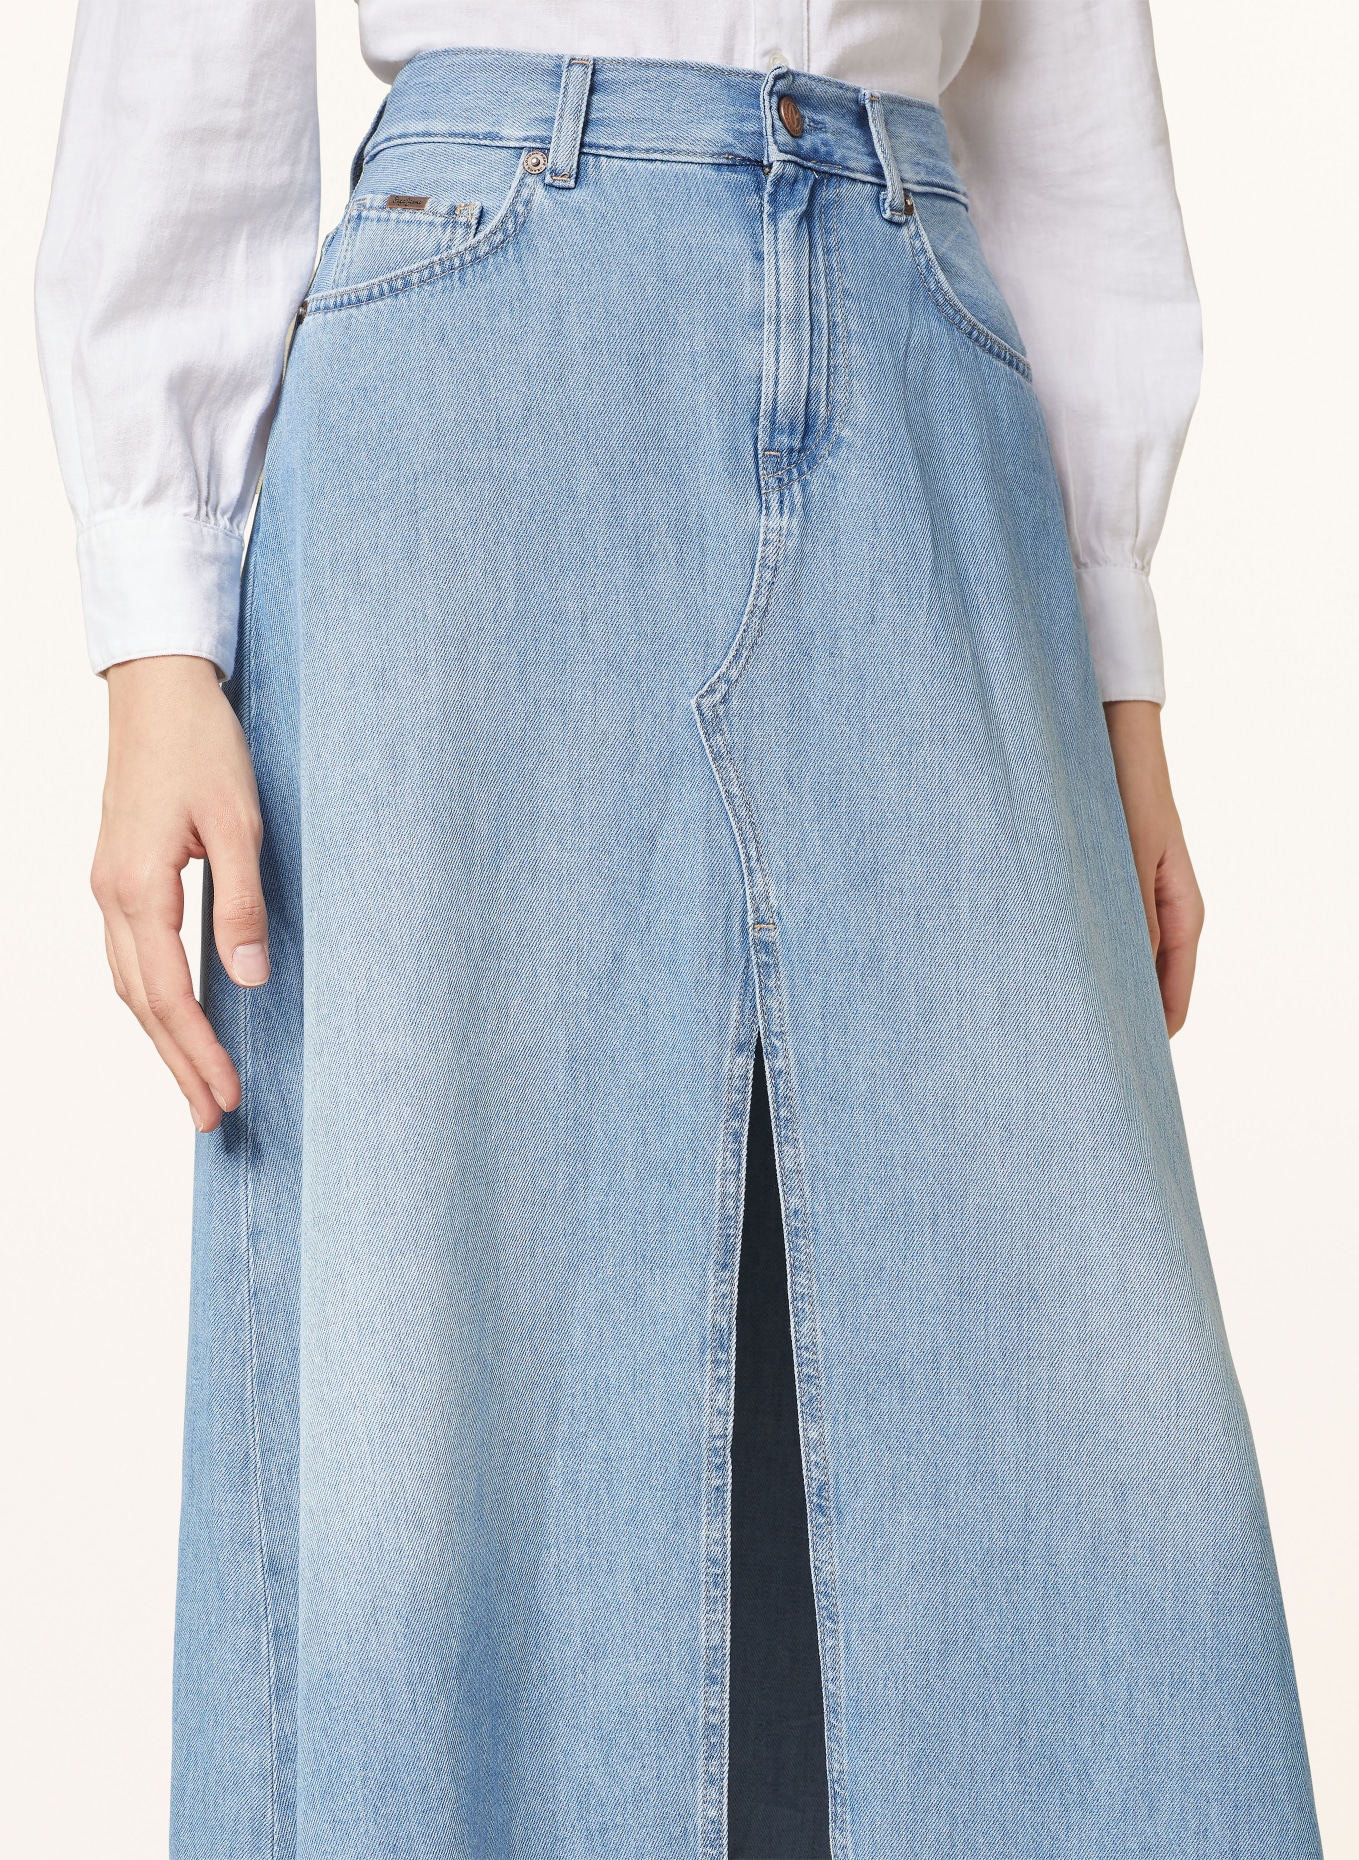 Y2K denim mini micro skirt low rise low waist 2000s Pepe Jeans | eBay